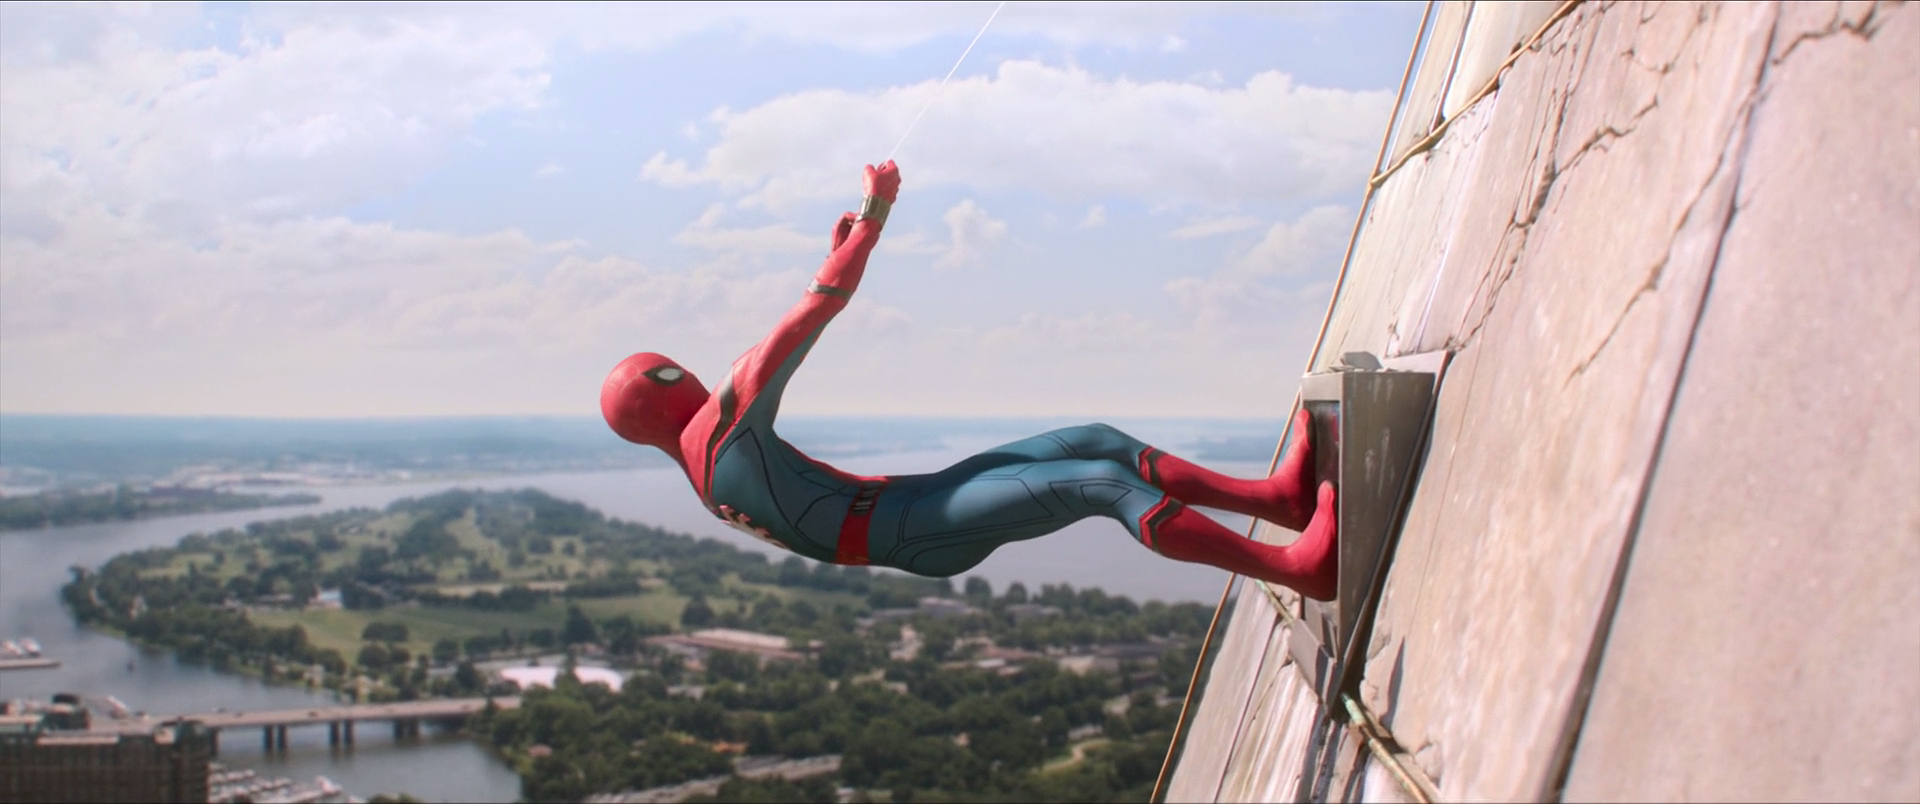 Image Spider Man Homecoming 2017 1080p BRRip x264 DTS NextBit.mkv snapshot ...